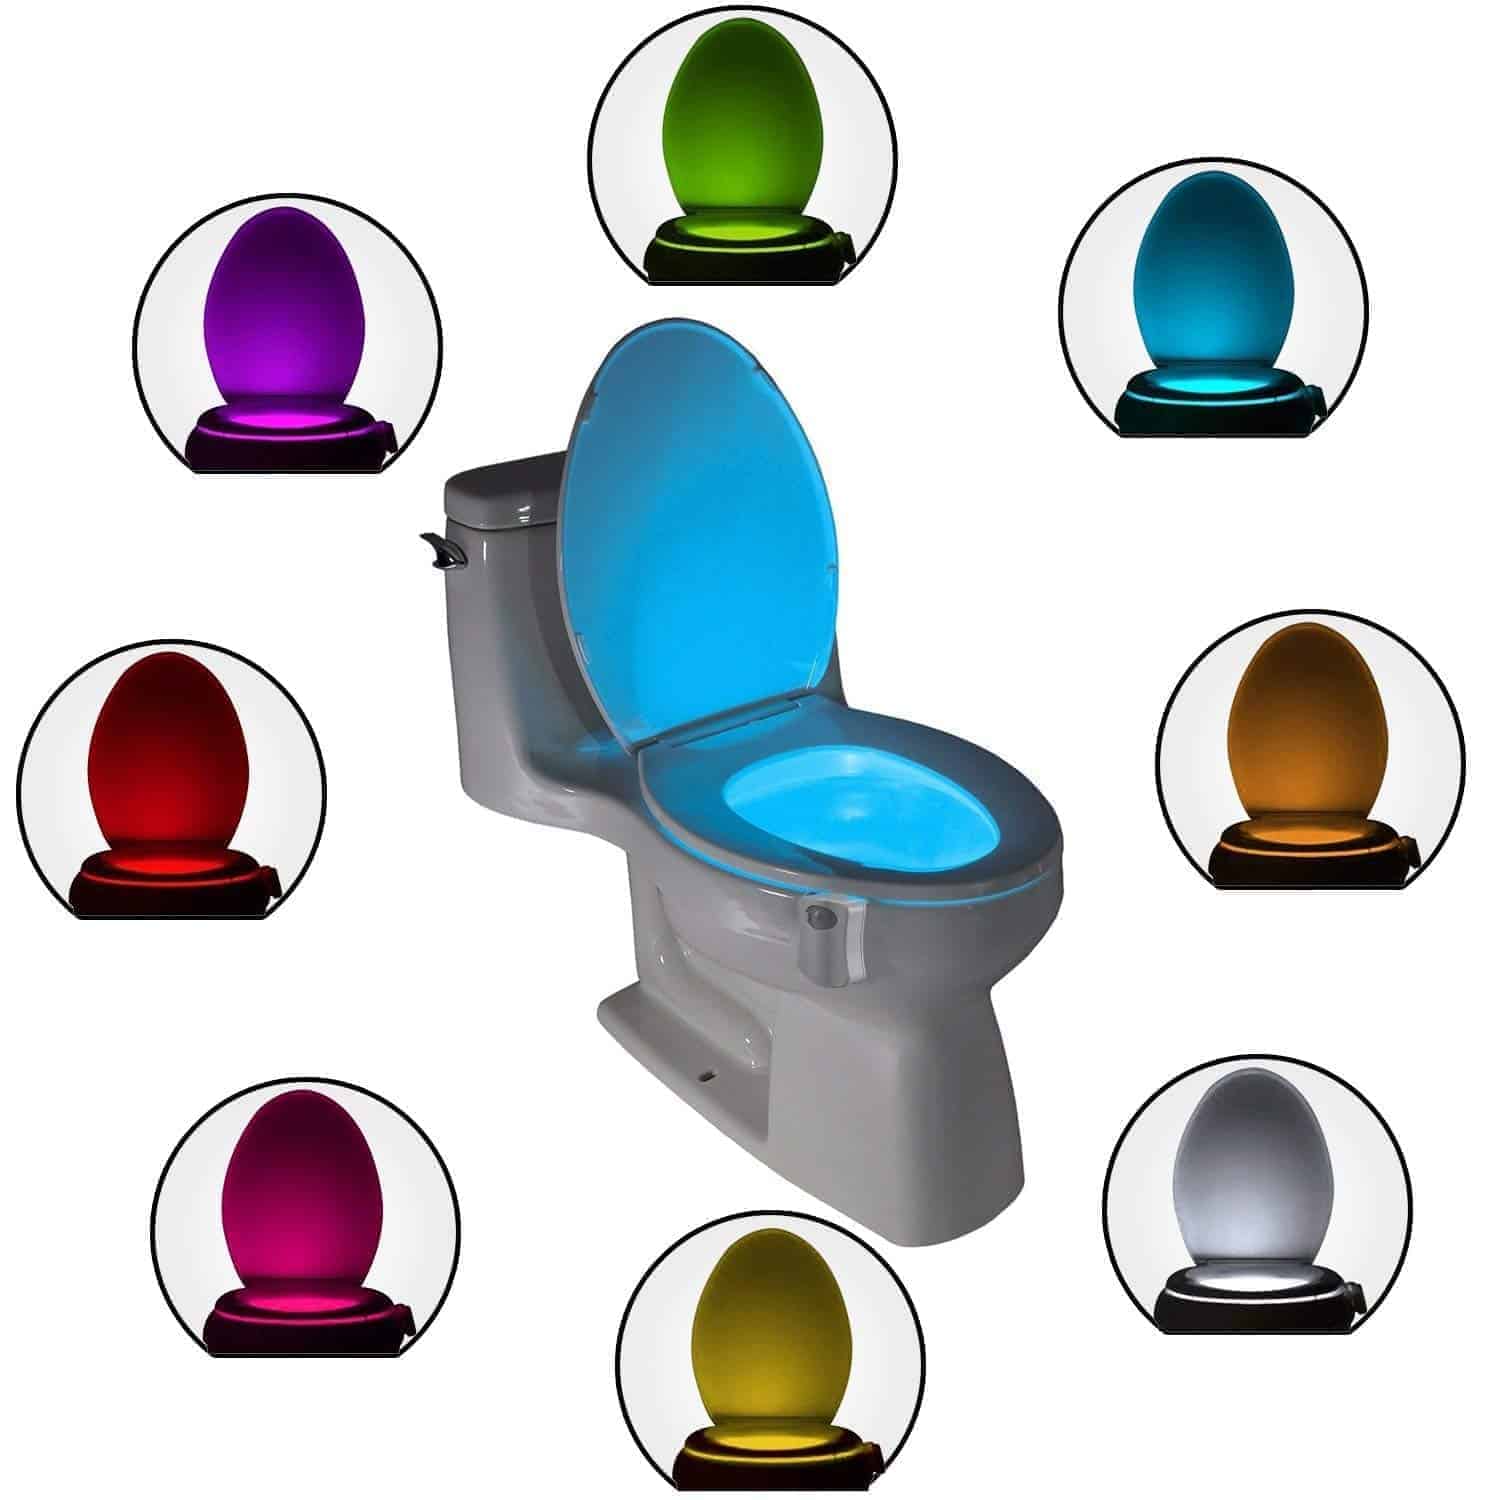 Fun Toilet Night Light Gadget Gift under $20